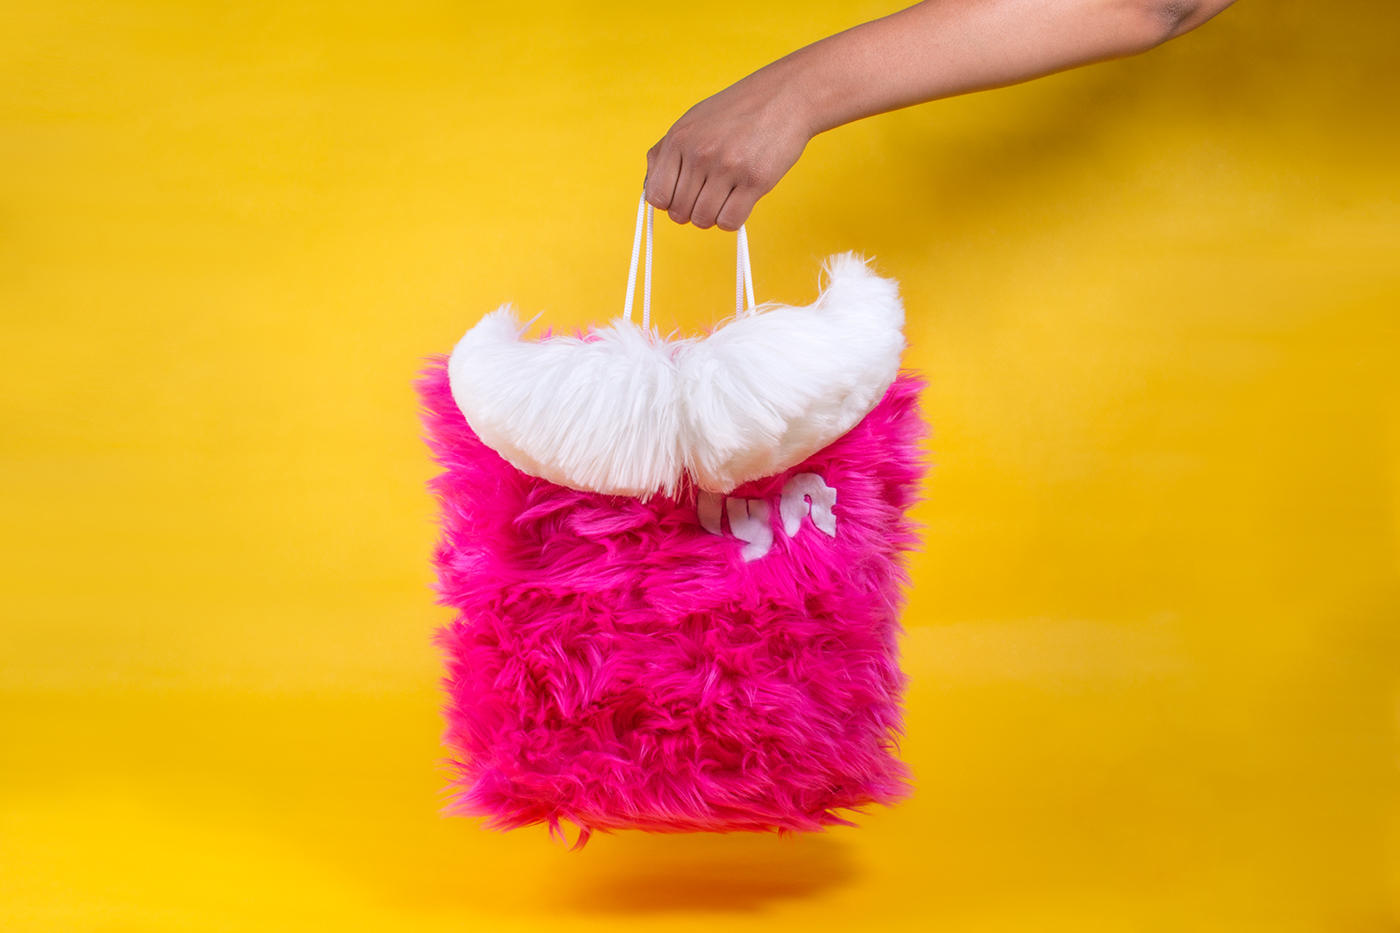 bag Advertising  lyft Packaging Bagvertising marketing   unconventional bag design interactive pink